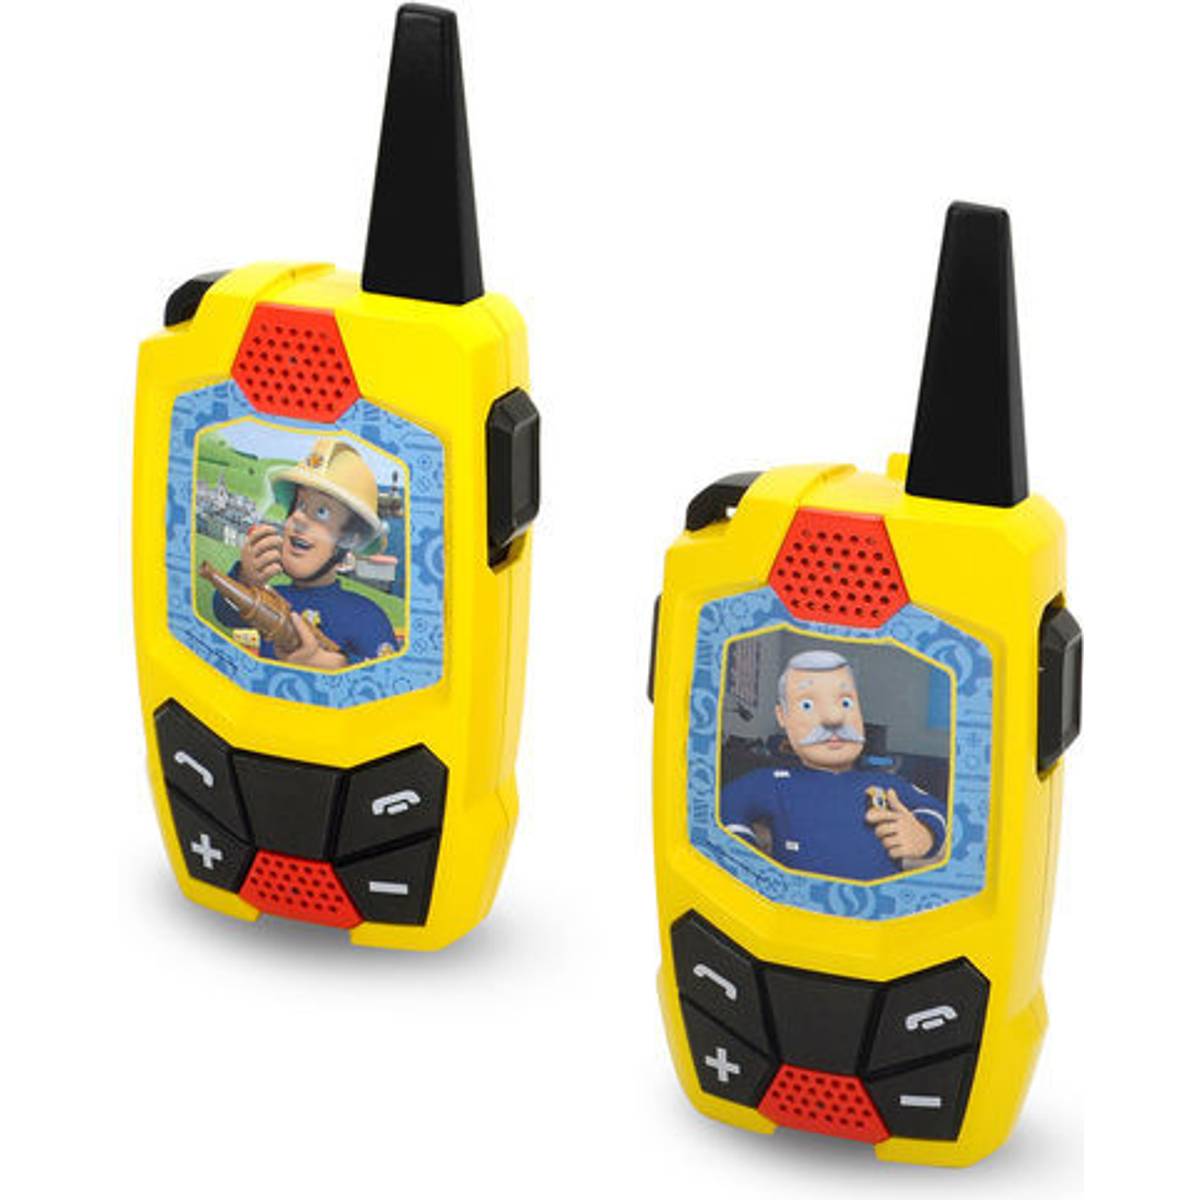 Barn walkie talkie • Hitta det lägsta priset hos PriceRunner nu »